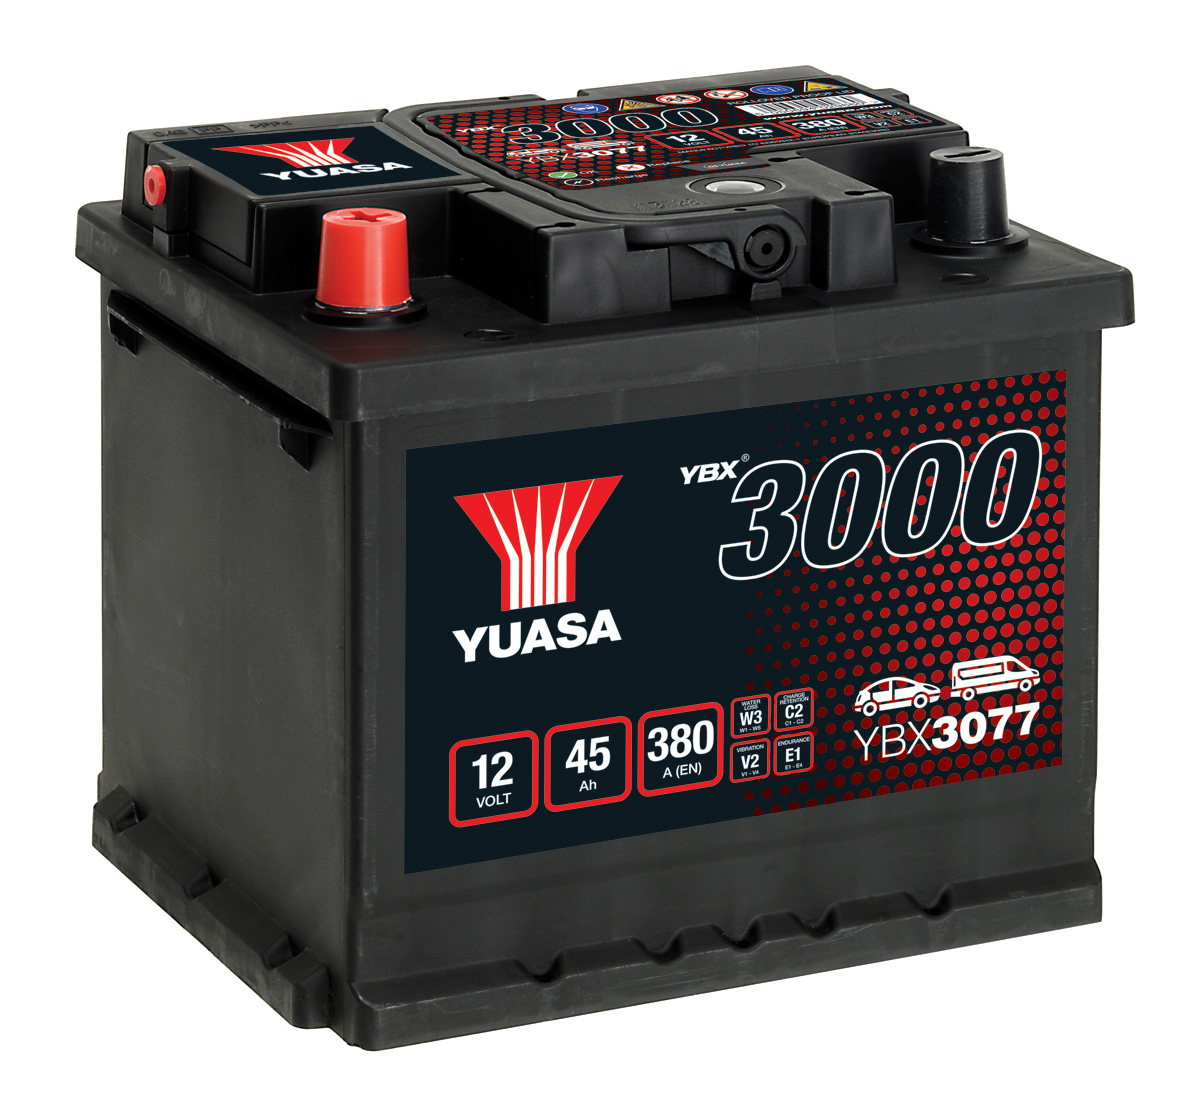 Yuasa YBX3077 077 Size 12V 45Ah Car Battery